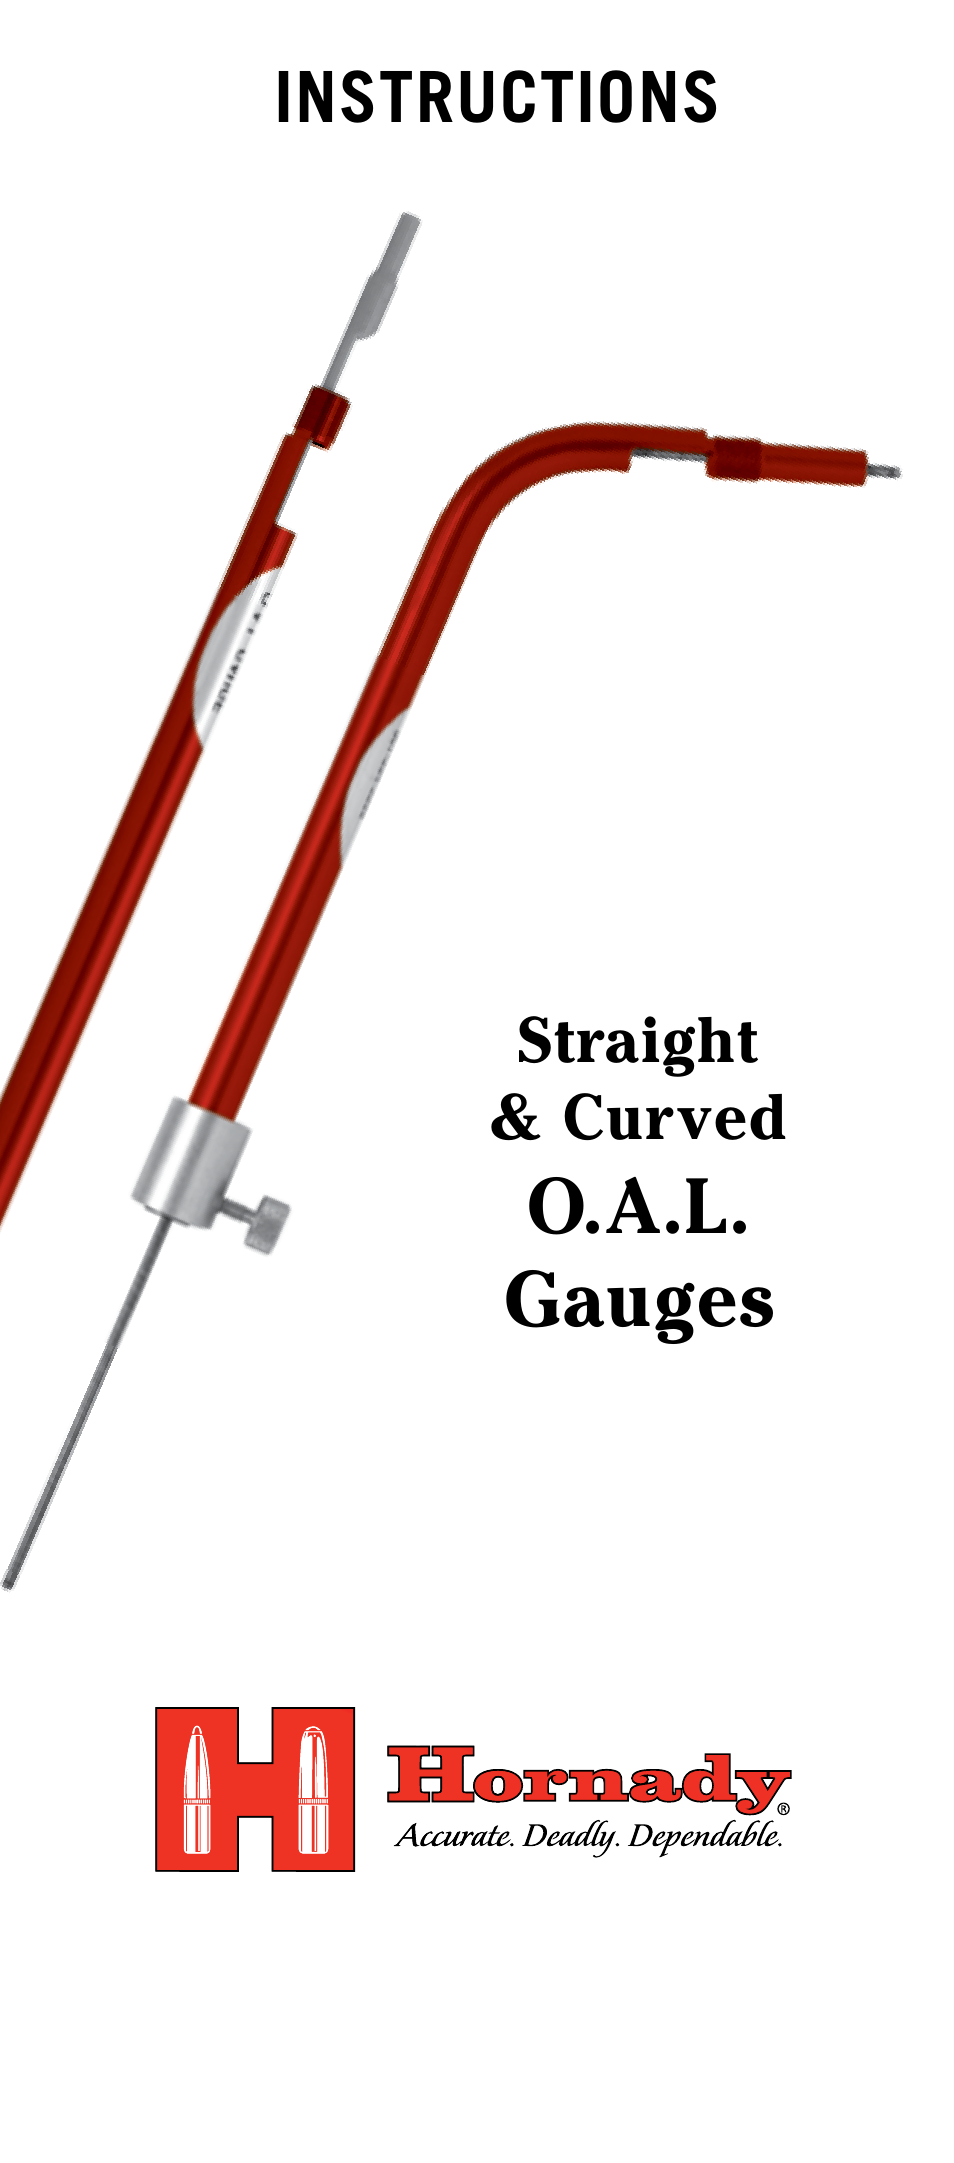 Lock-N-Load Overall Length (OAL) Gauges